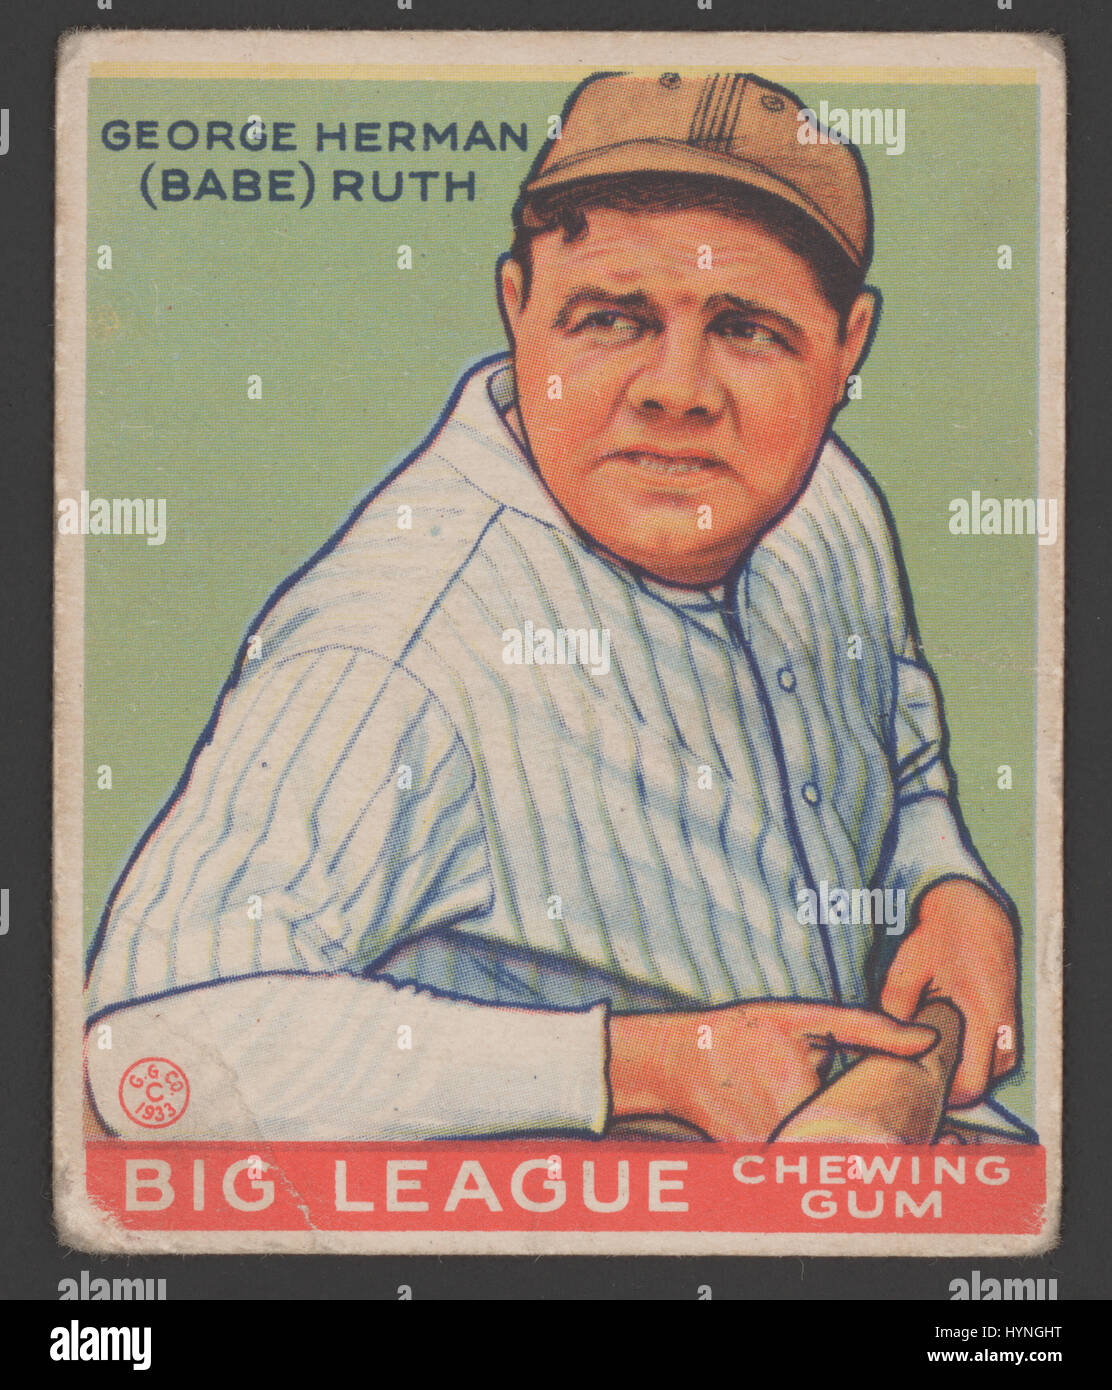 George Herman (Babe) Ruth, Big League Chewing Gum baseball card. 1933. Stock Photo